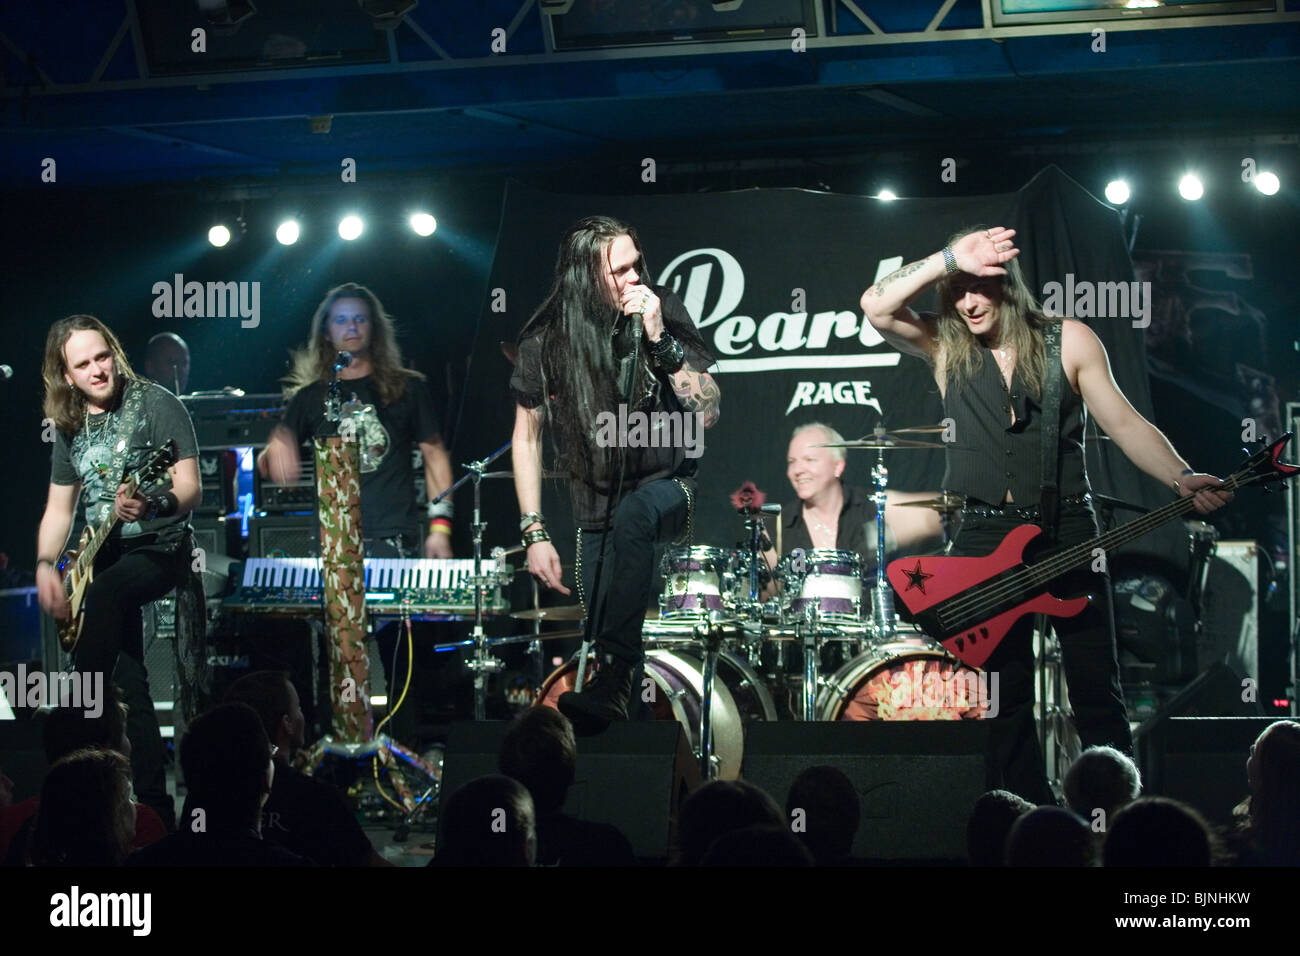 BUDAPEST - MARZO 04: Jaded Cuore, Germania Metal Band esegue sul palco al Club Diesel Foto Stock